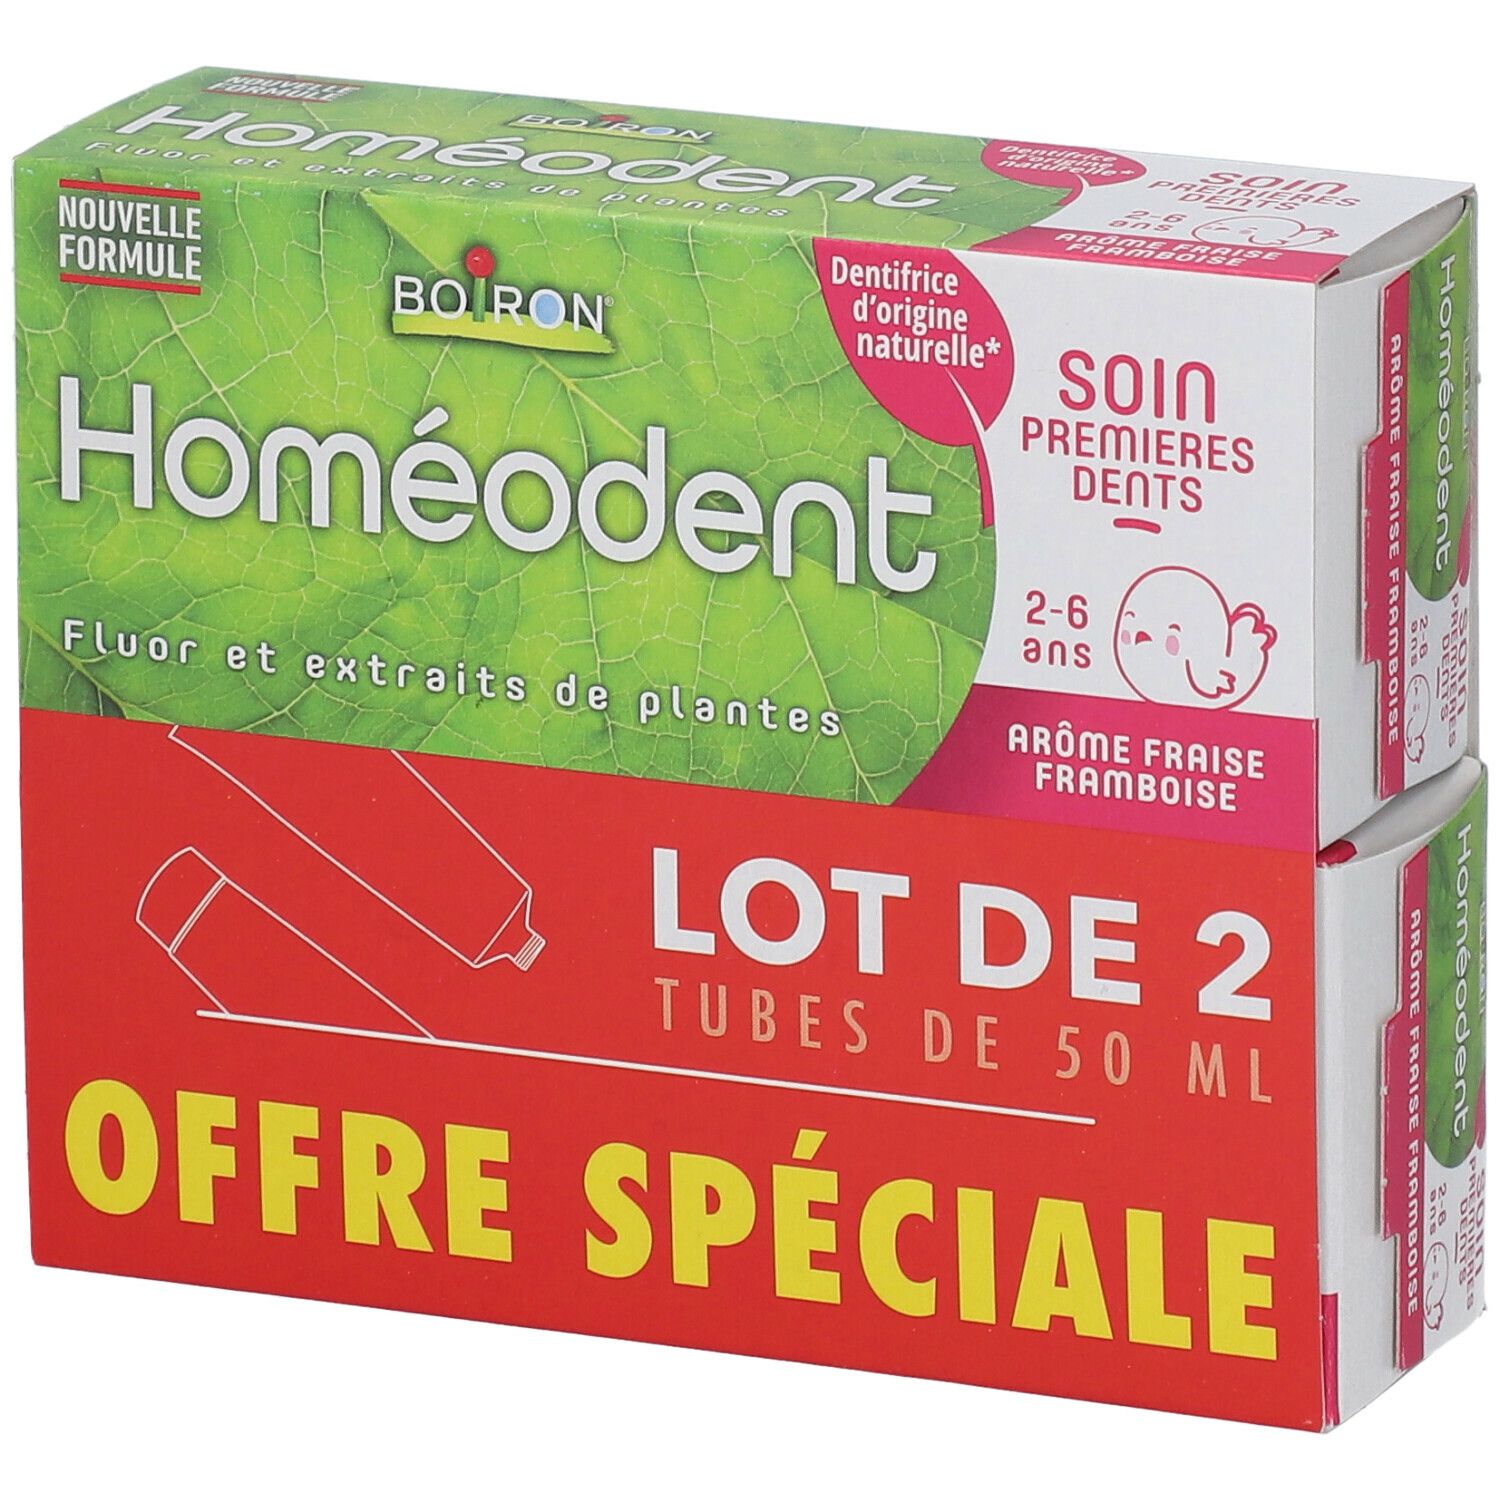 Boiron® Homéodent Soin Premières Dents, Gel dentifrice arôme fraise/framboise